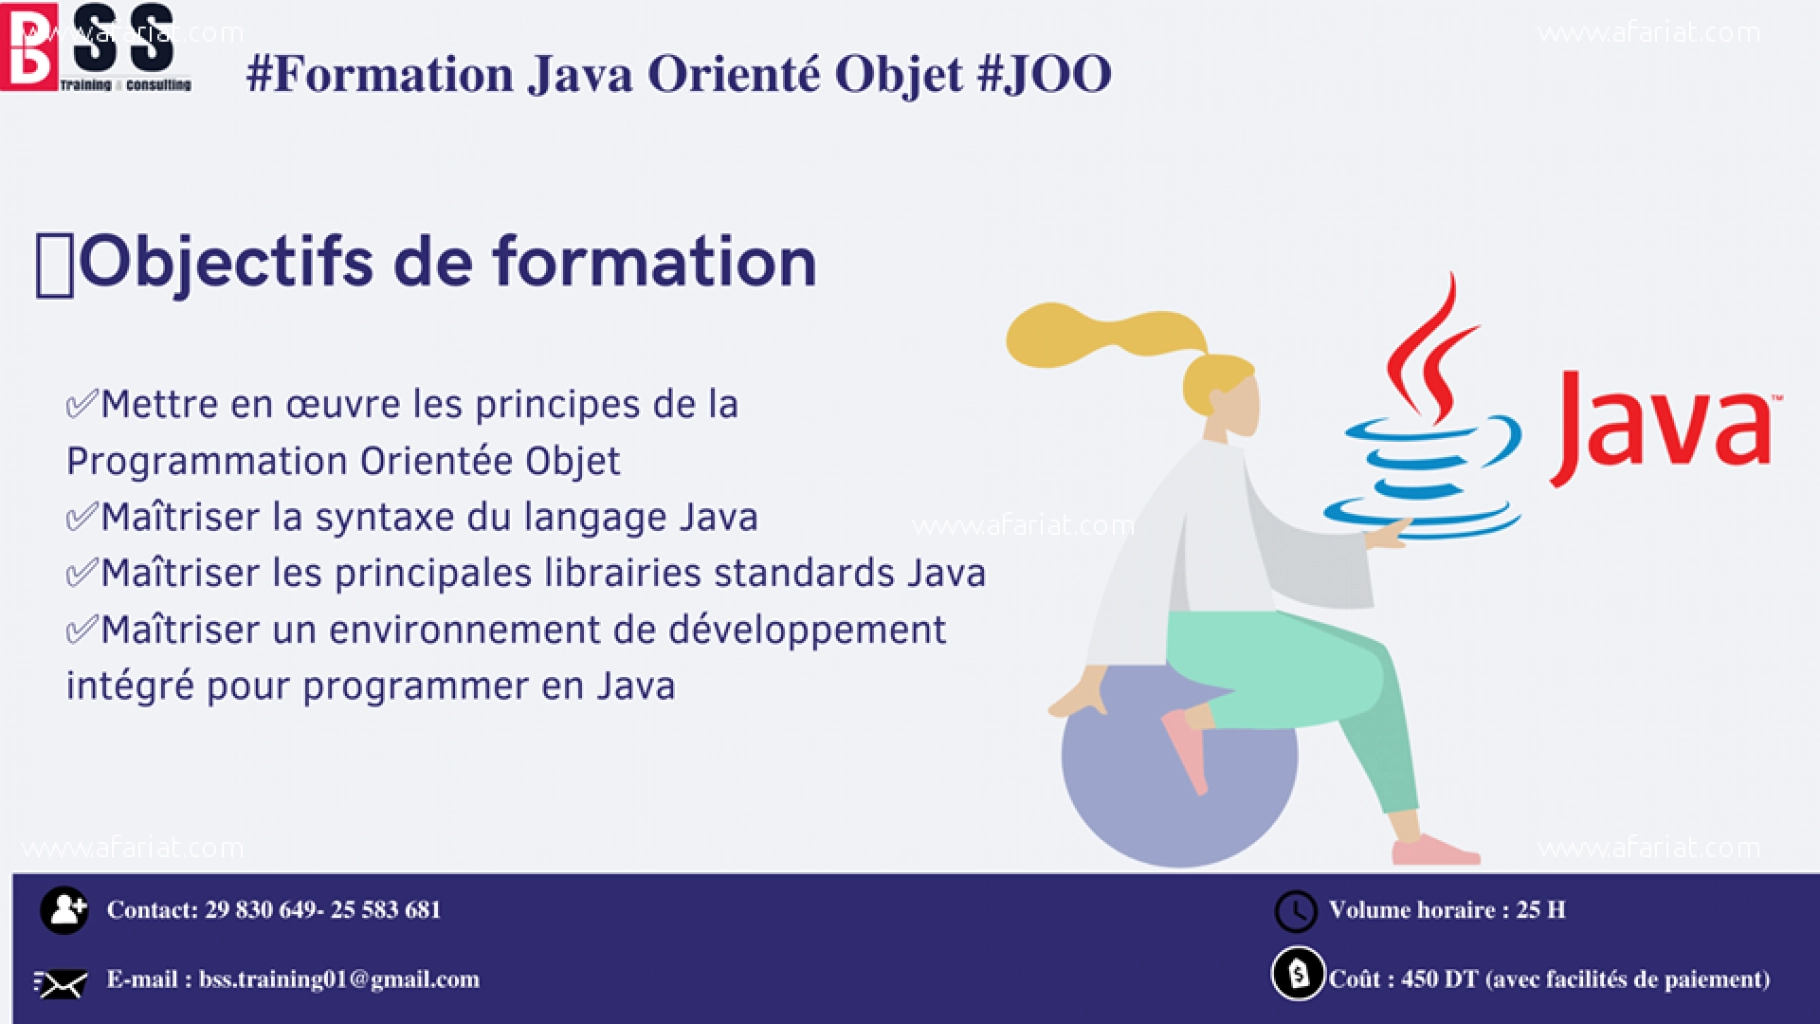 Formation Java Orienté Objet